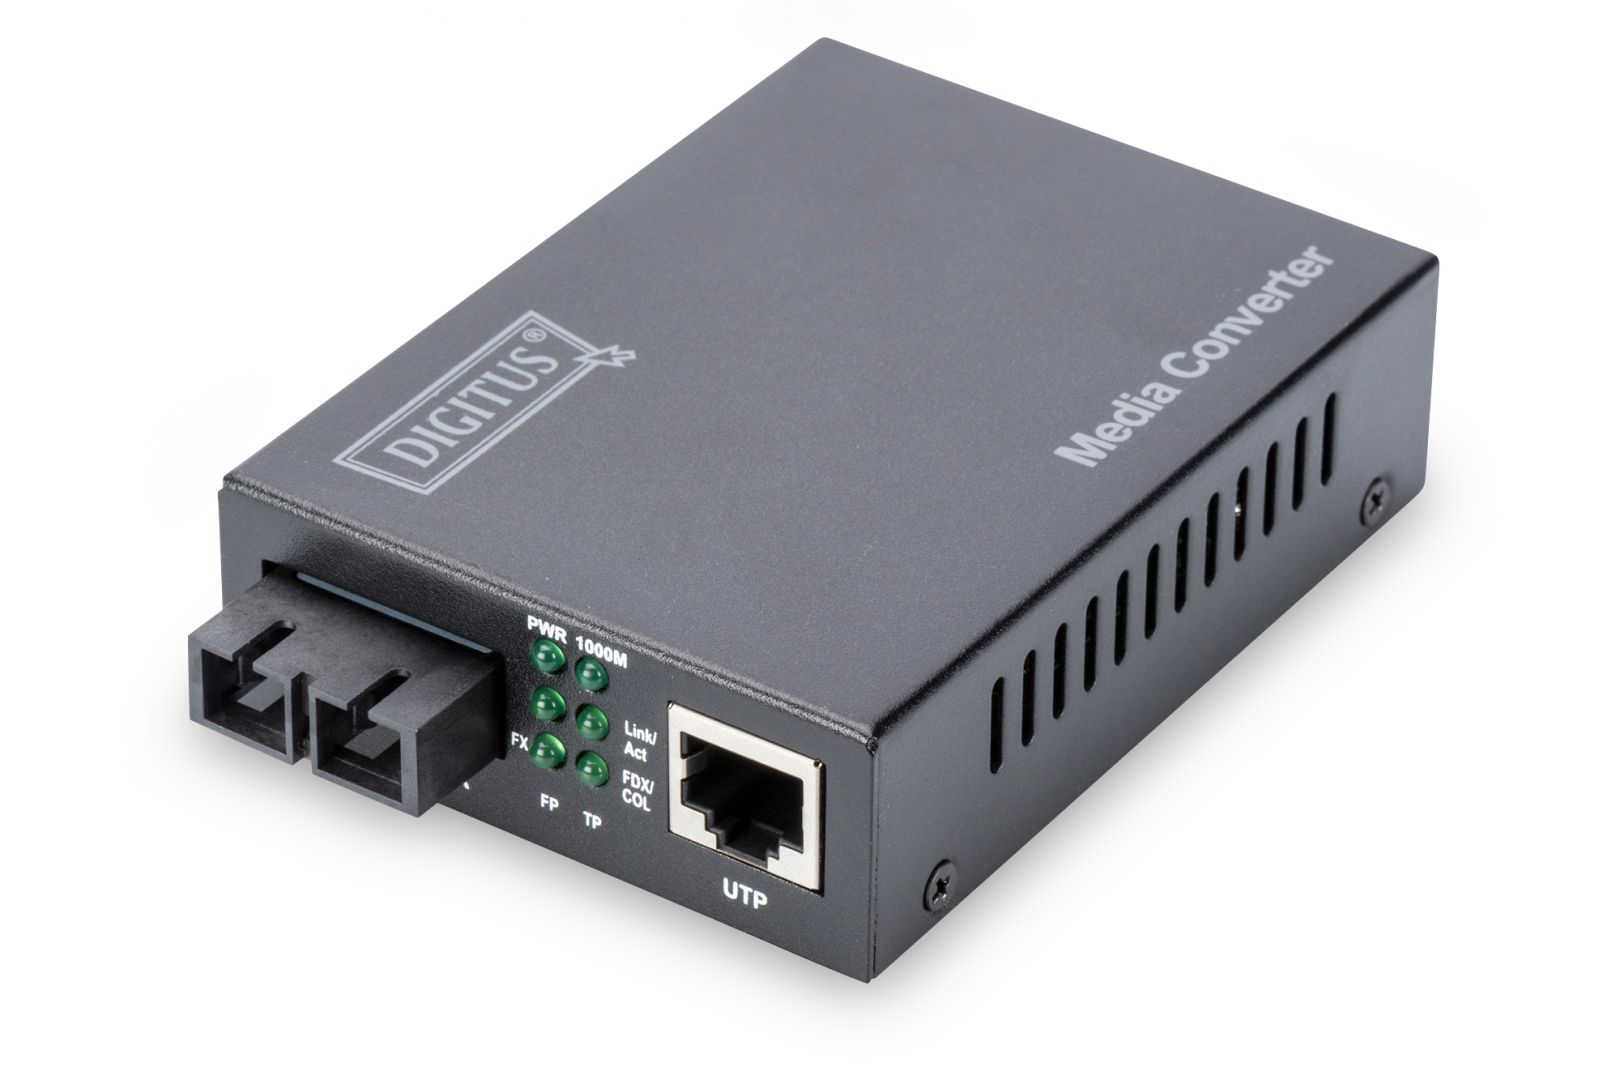 Digitus Gigabit Ethernet Singlemode Media Converter